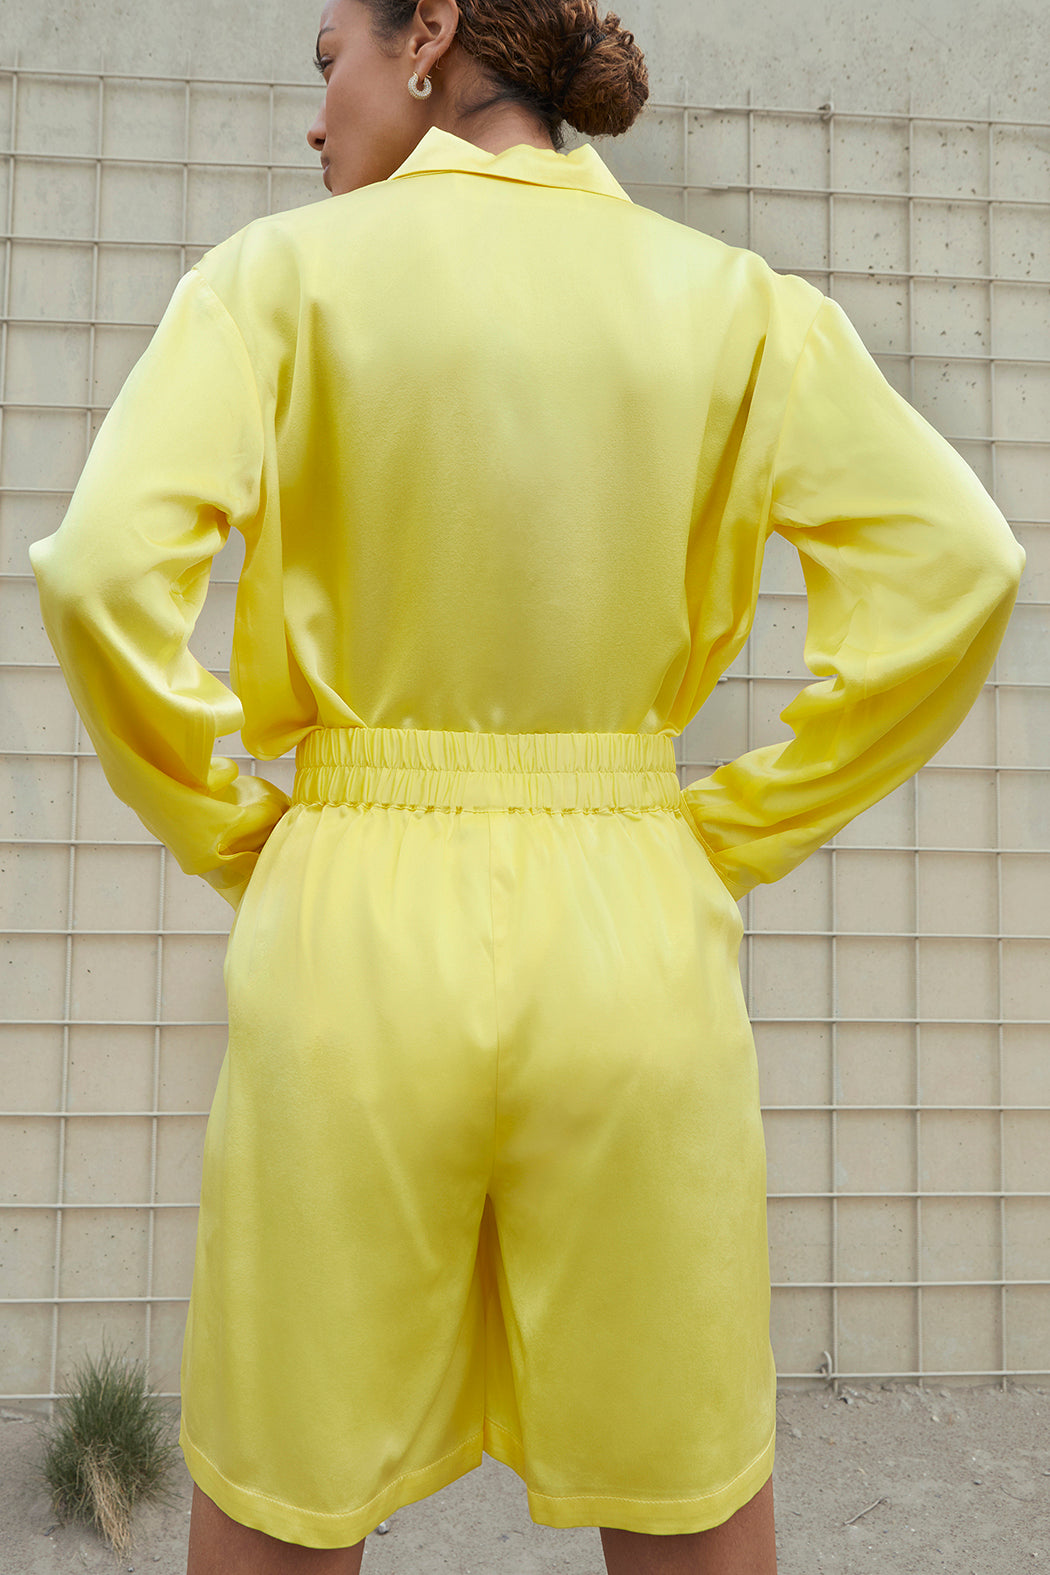 Free People Riverside Tool & Dye Mustard Yellow Coveralls Jumper Size  Medium | eBay